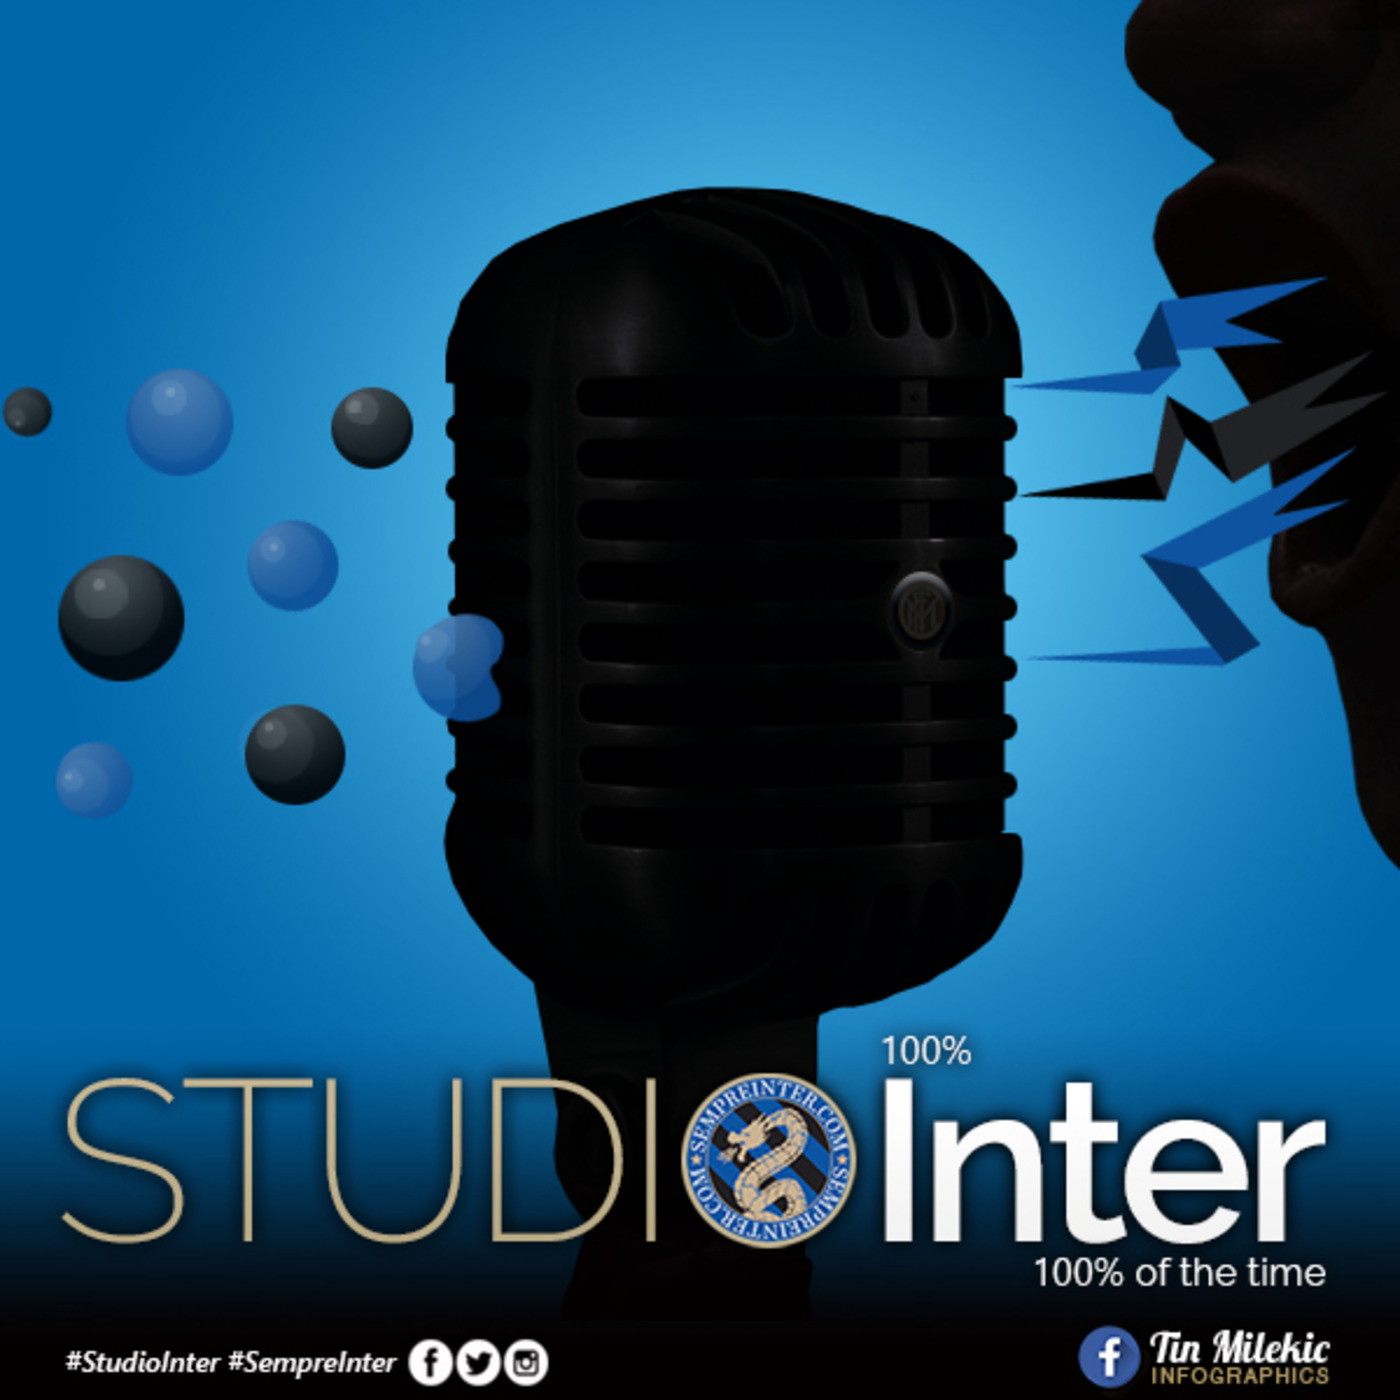 Episode 188: Season Premiere #StudioInter XXL Ep. 188: ”Difficult To See Inter Sign Duvan Zapata & Keep Lautaro Martinez”